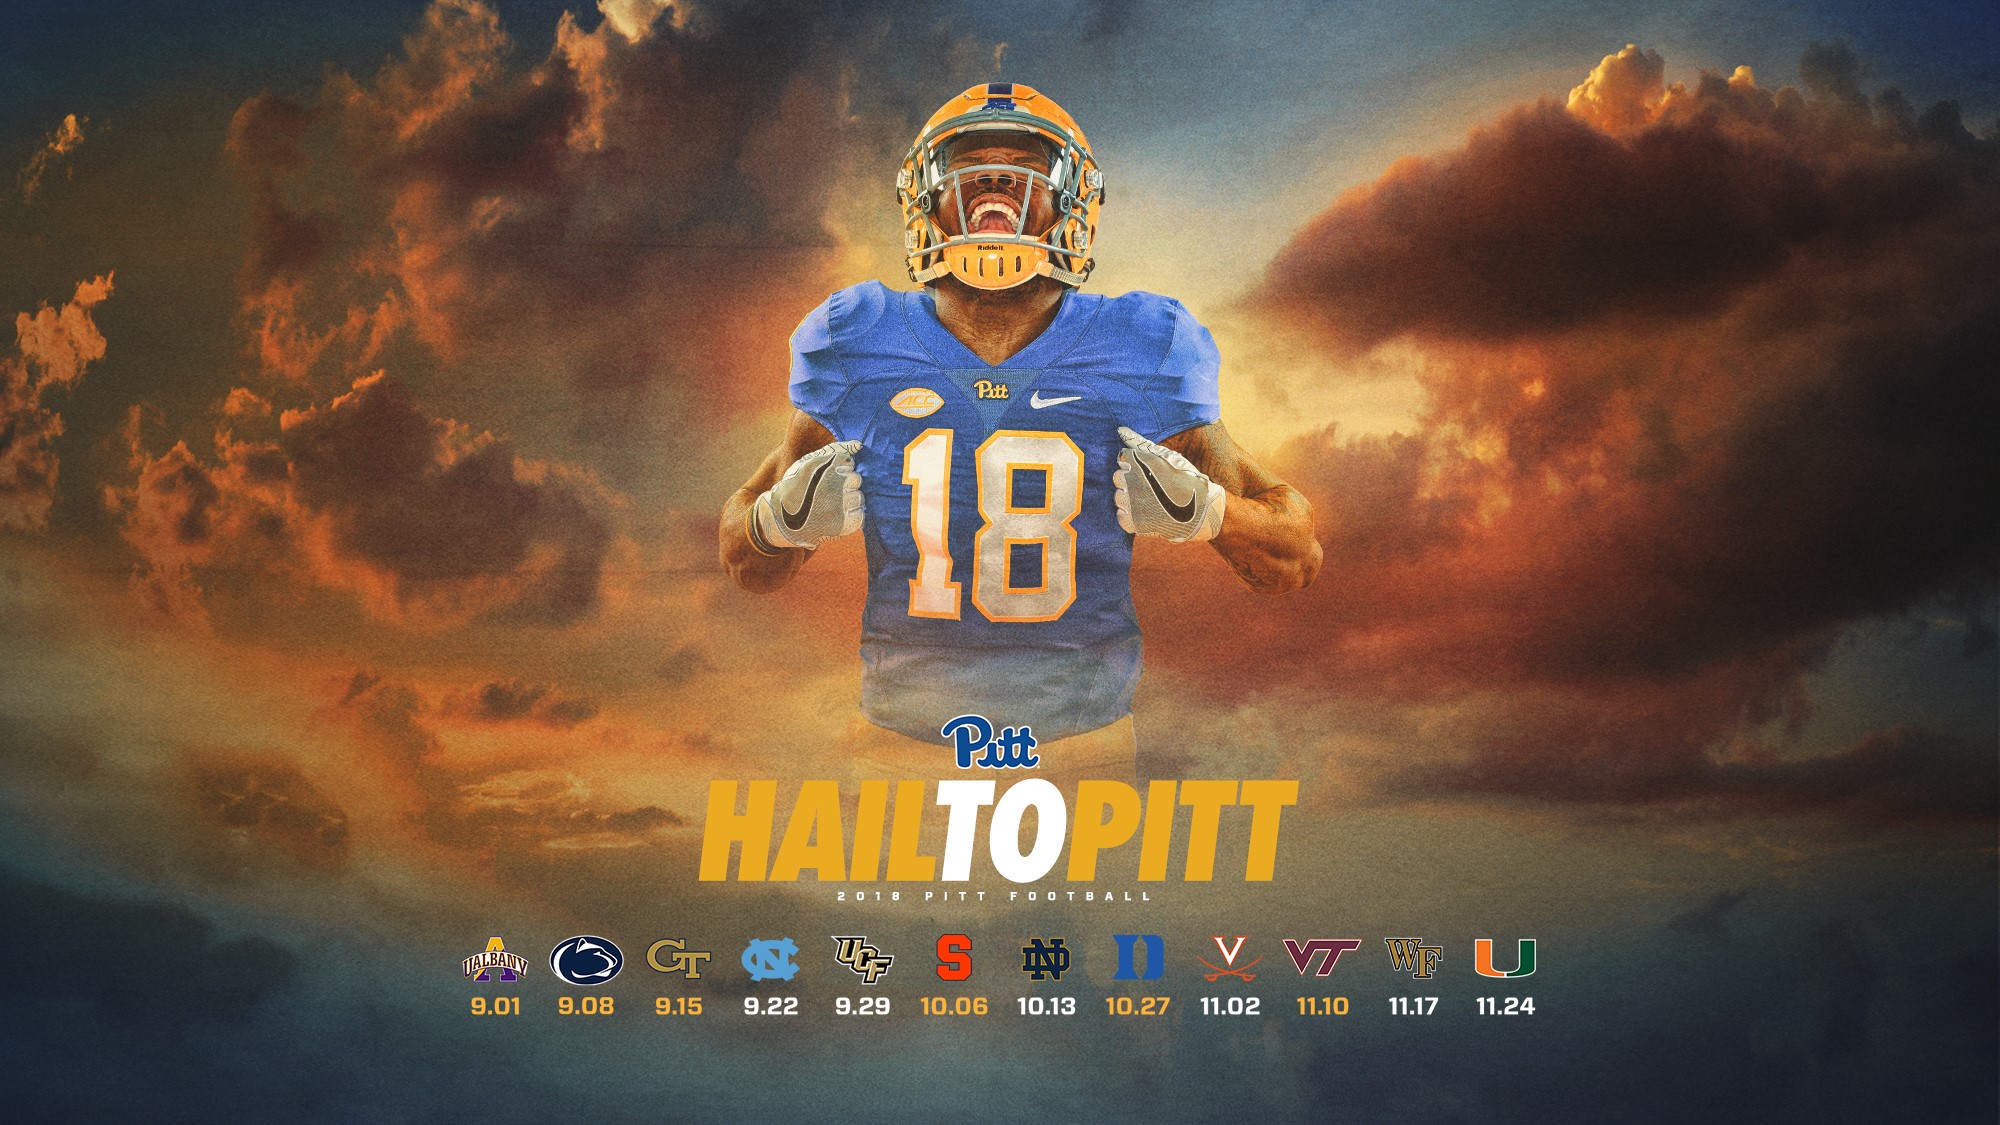 Pitt Announces 2018 Football Schedule Panthers #H2P